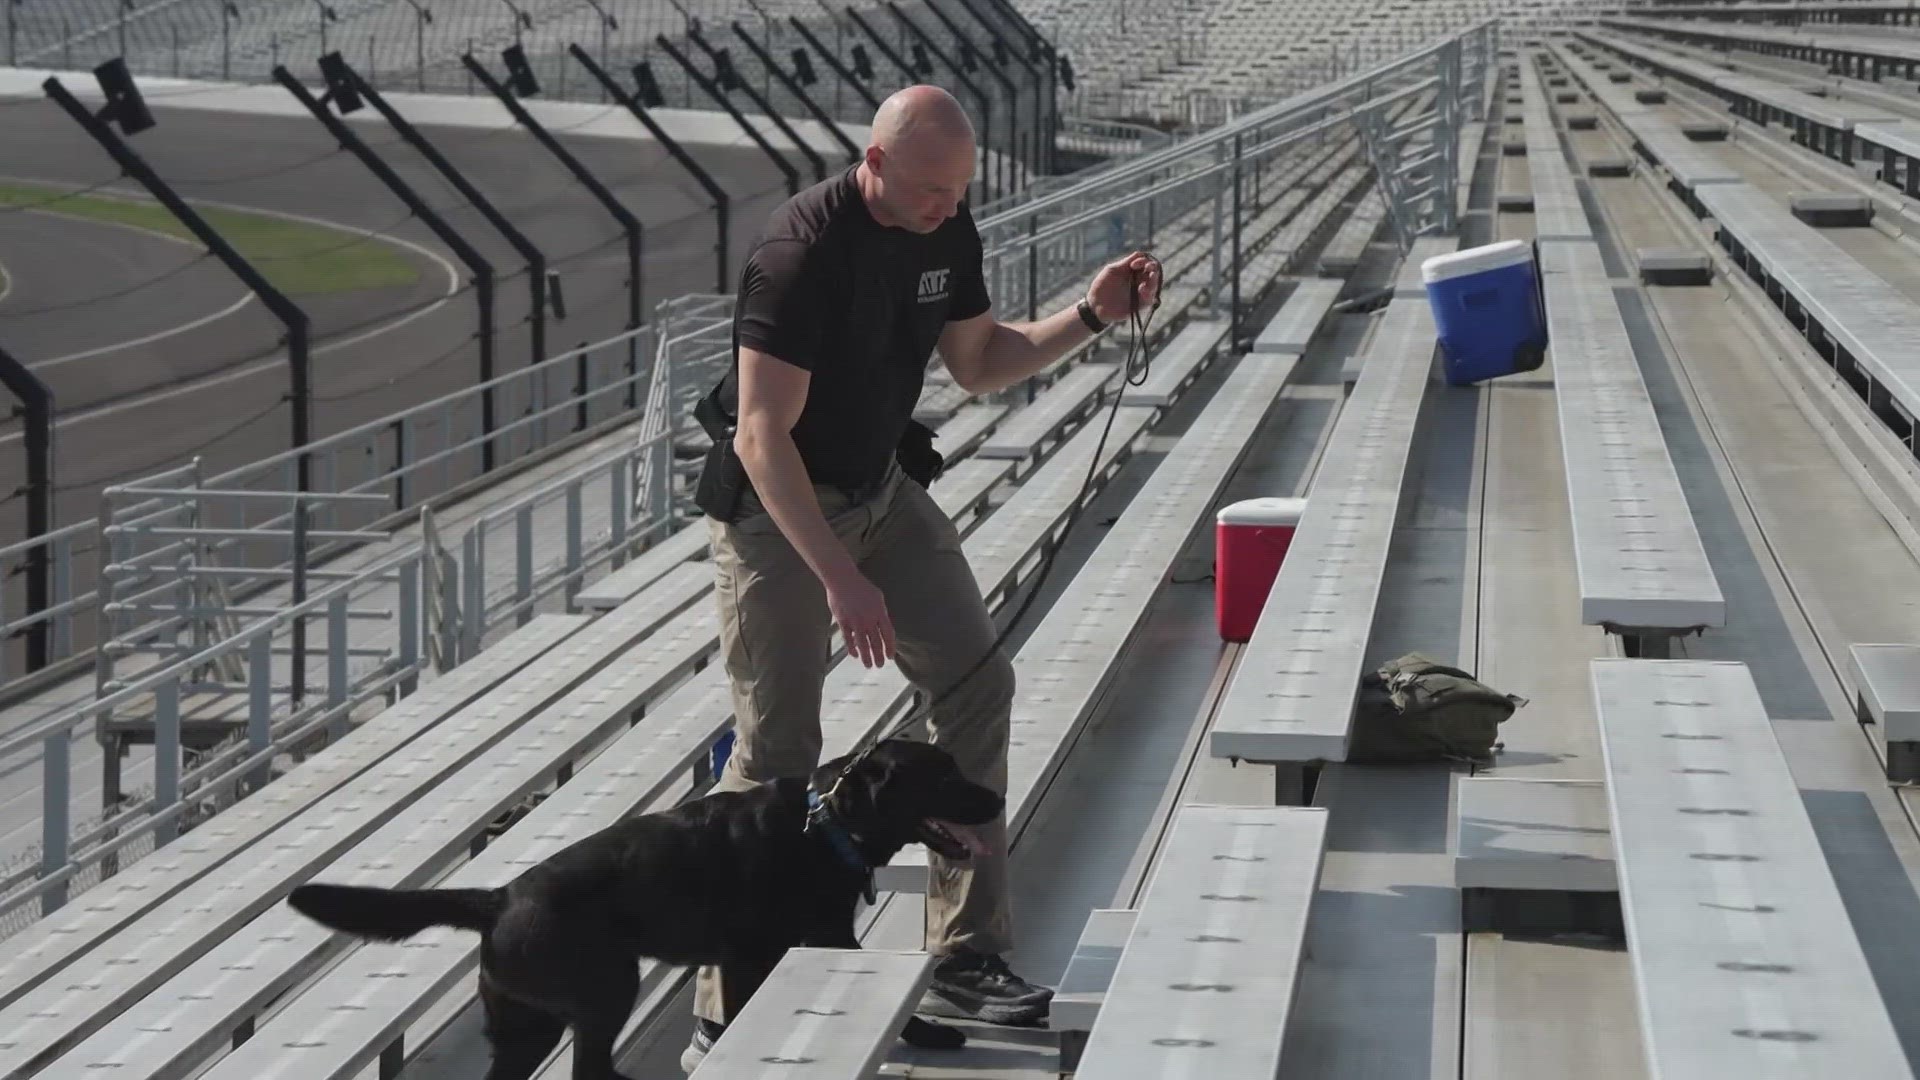 The canines go through various types of training scenarios like the Boston marathon bombing.